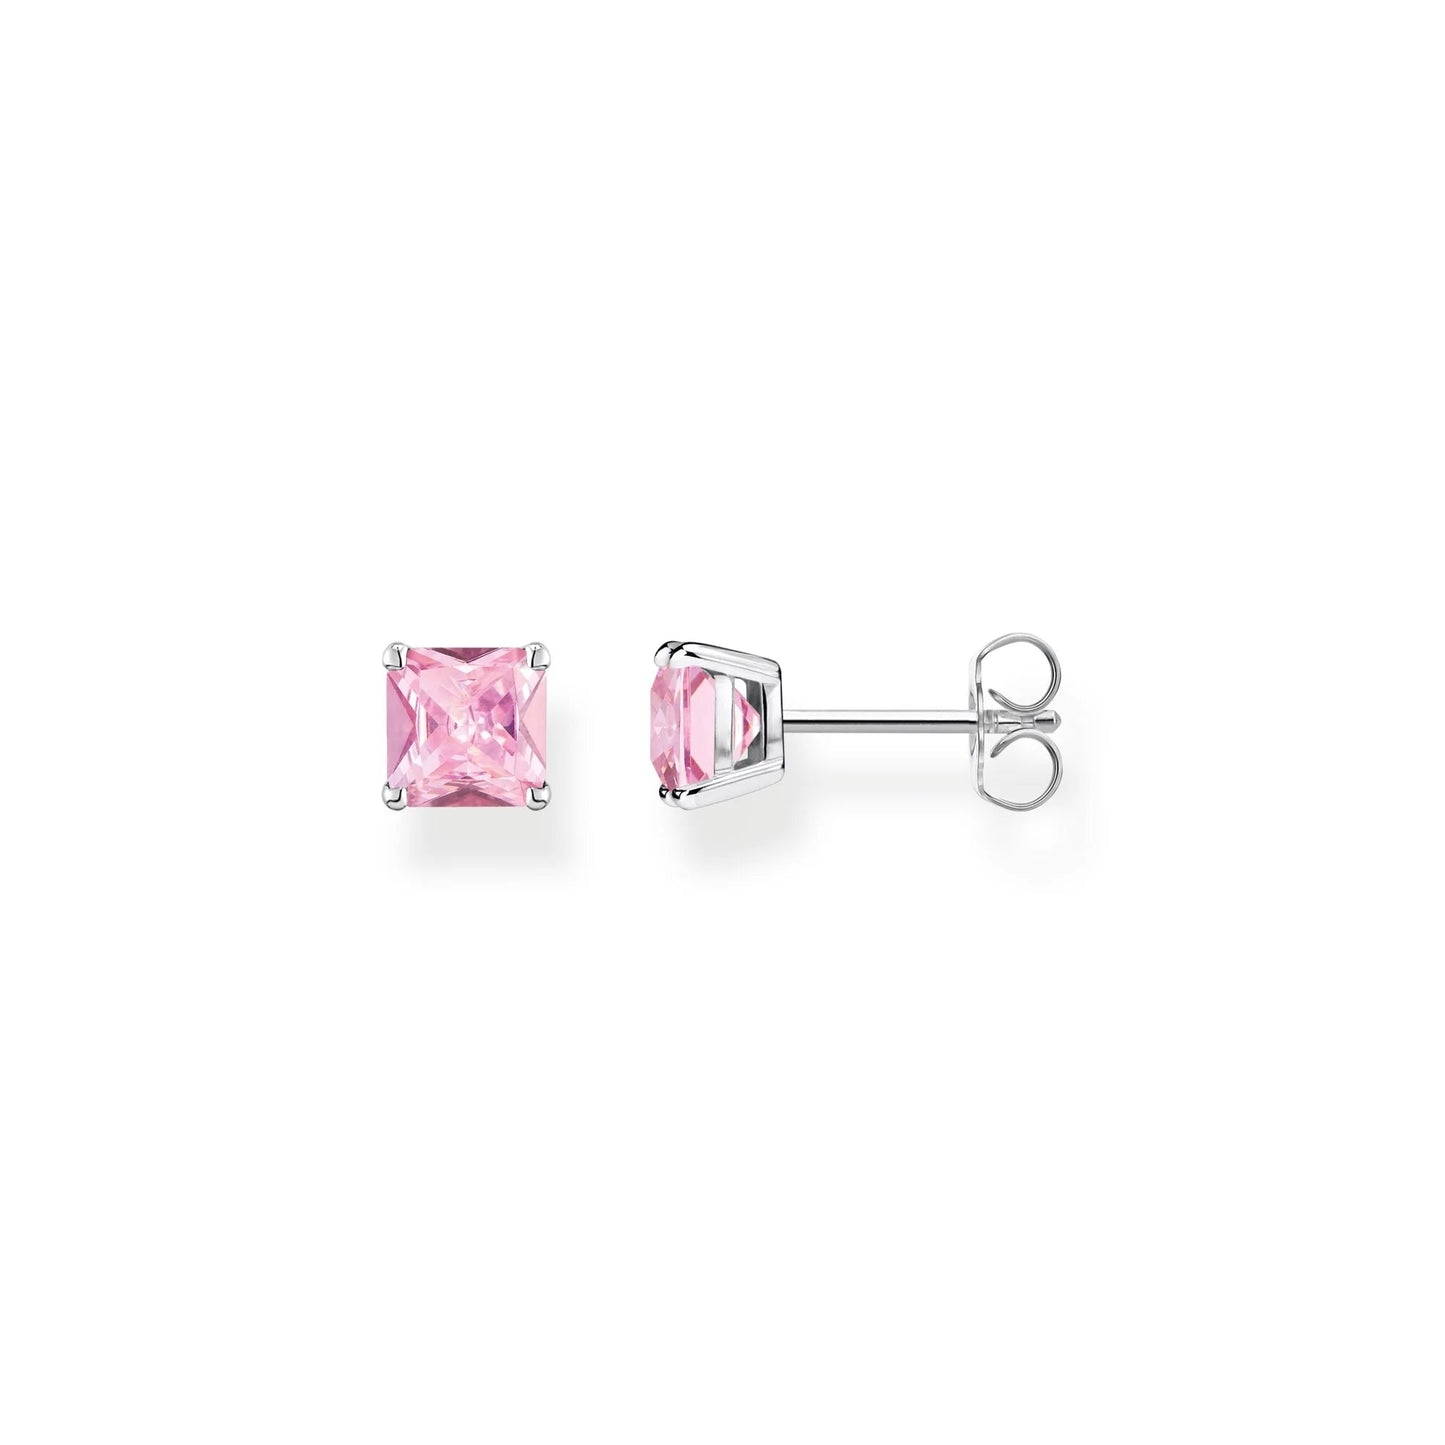 THOMAS SABO Heritage Pink Stone Stud Earrings